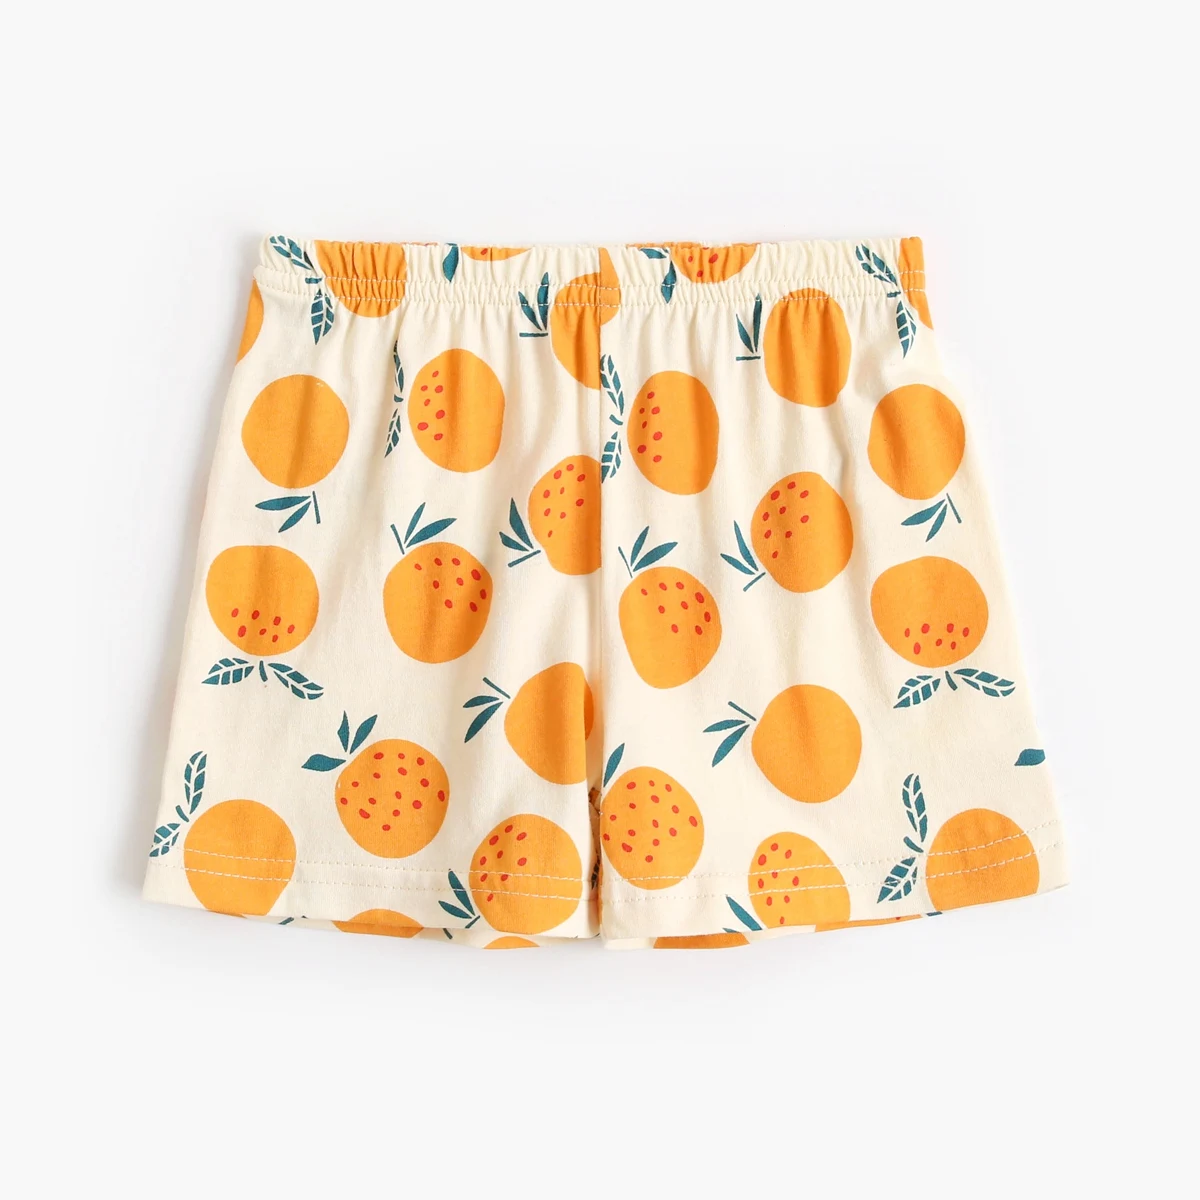 Sanlutoz Cute Printing Cotton Baby Boys Girls Clothes Sets Summer Infants Short Sleeve Tops + Shorts 2pcs stylish baby clothing set